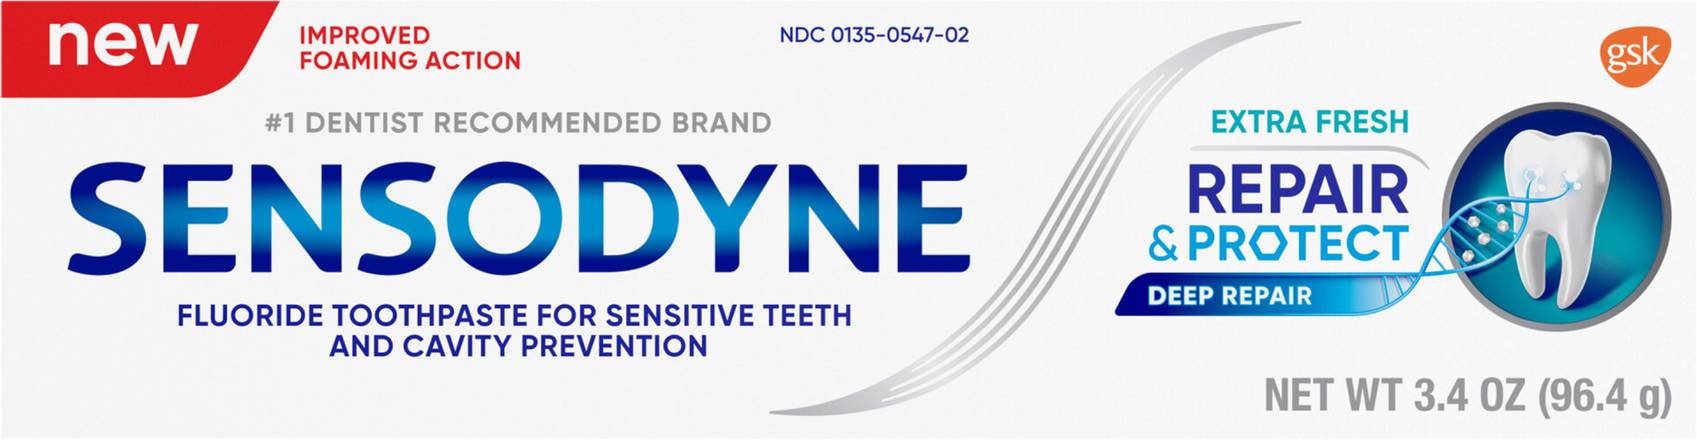 Sensodyne Extra Fresh Repair & Protect Fluoride Toothpaste